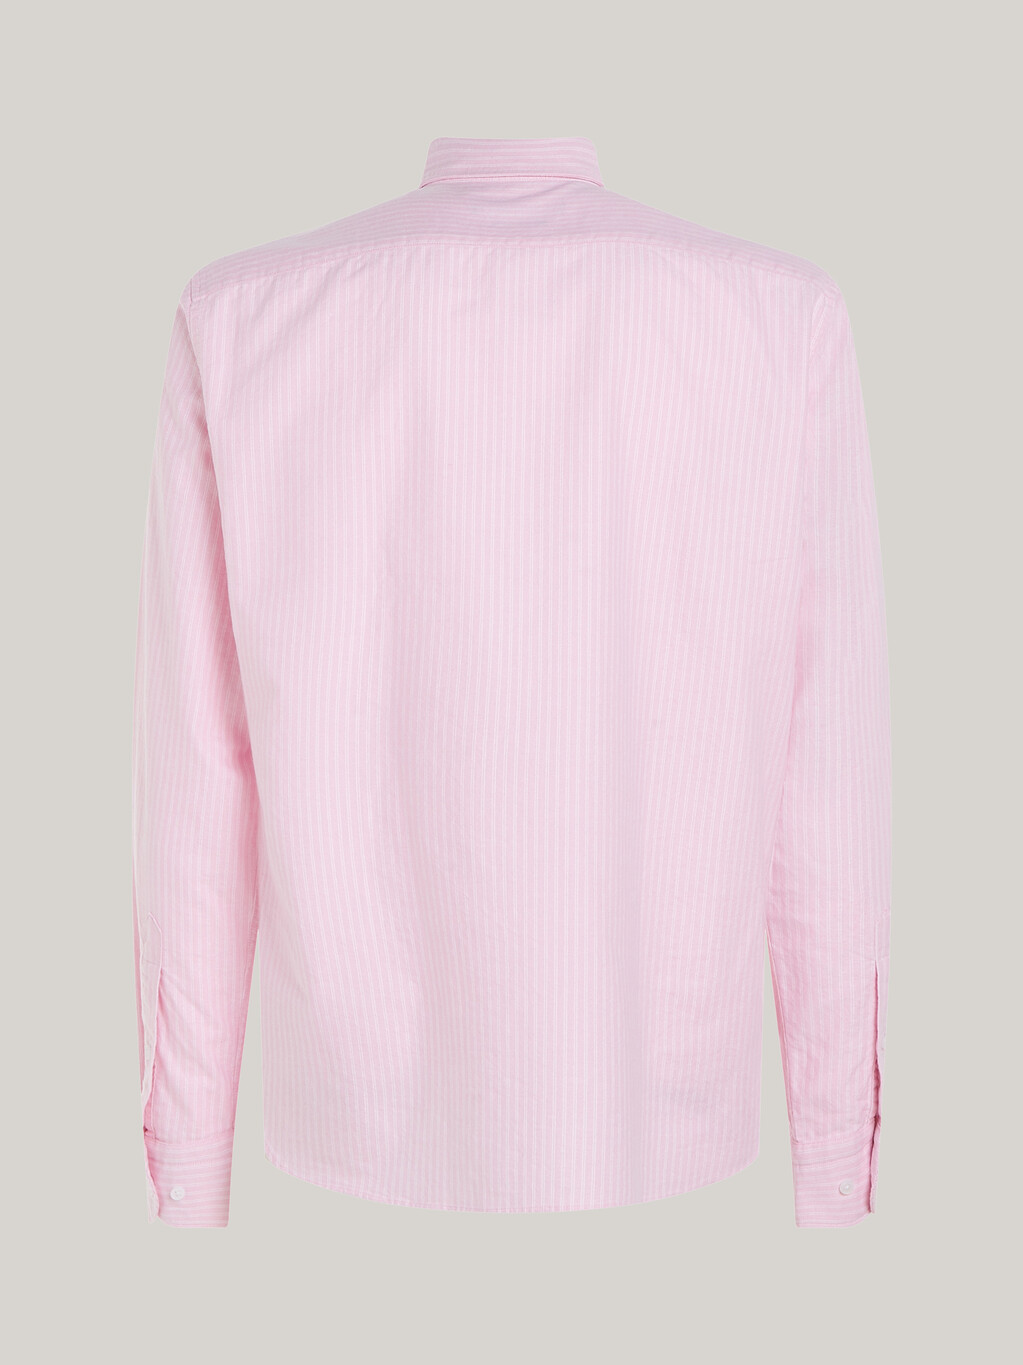 條紋標準版型裇衫, Classic Pink / Optic White, hi-res